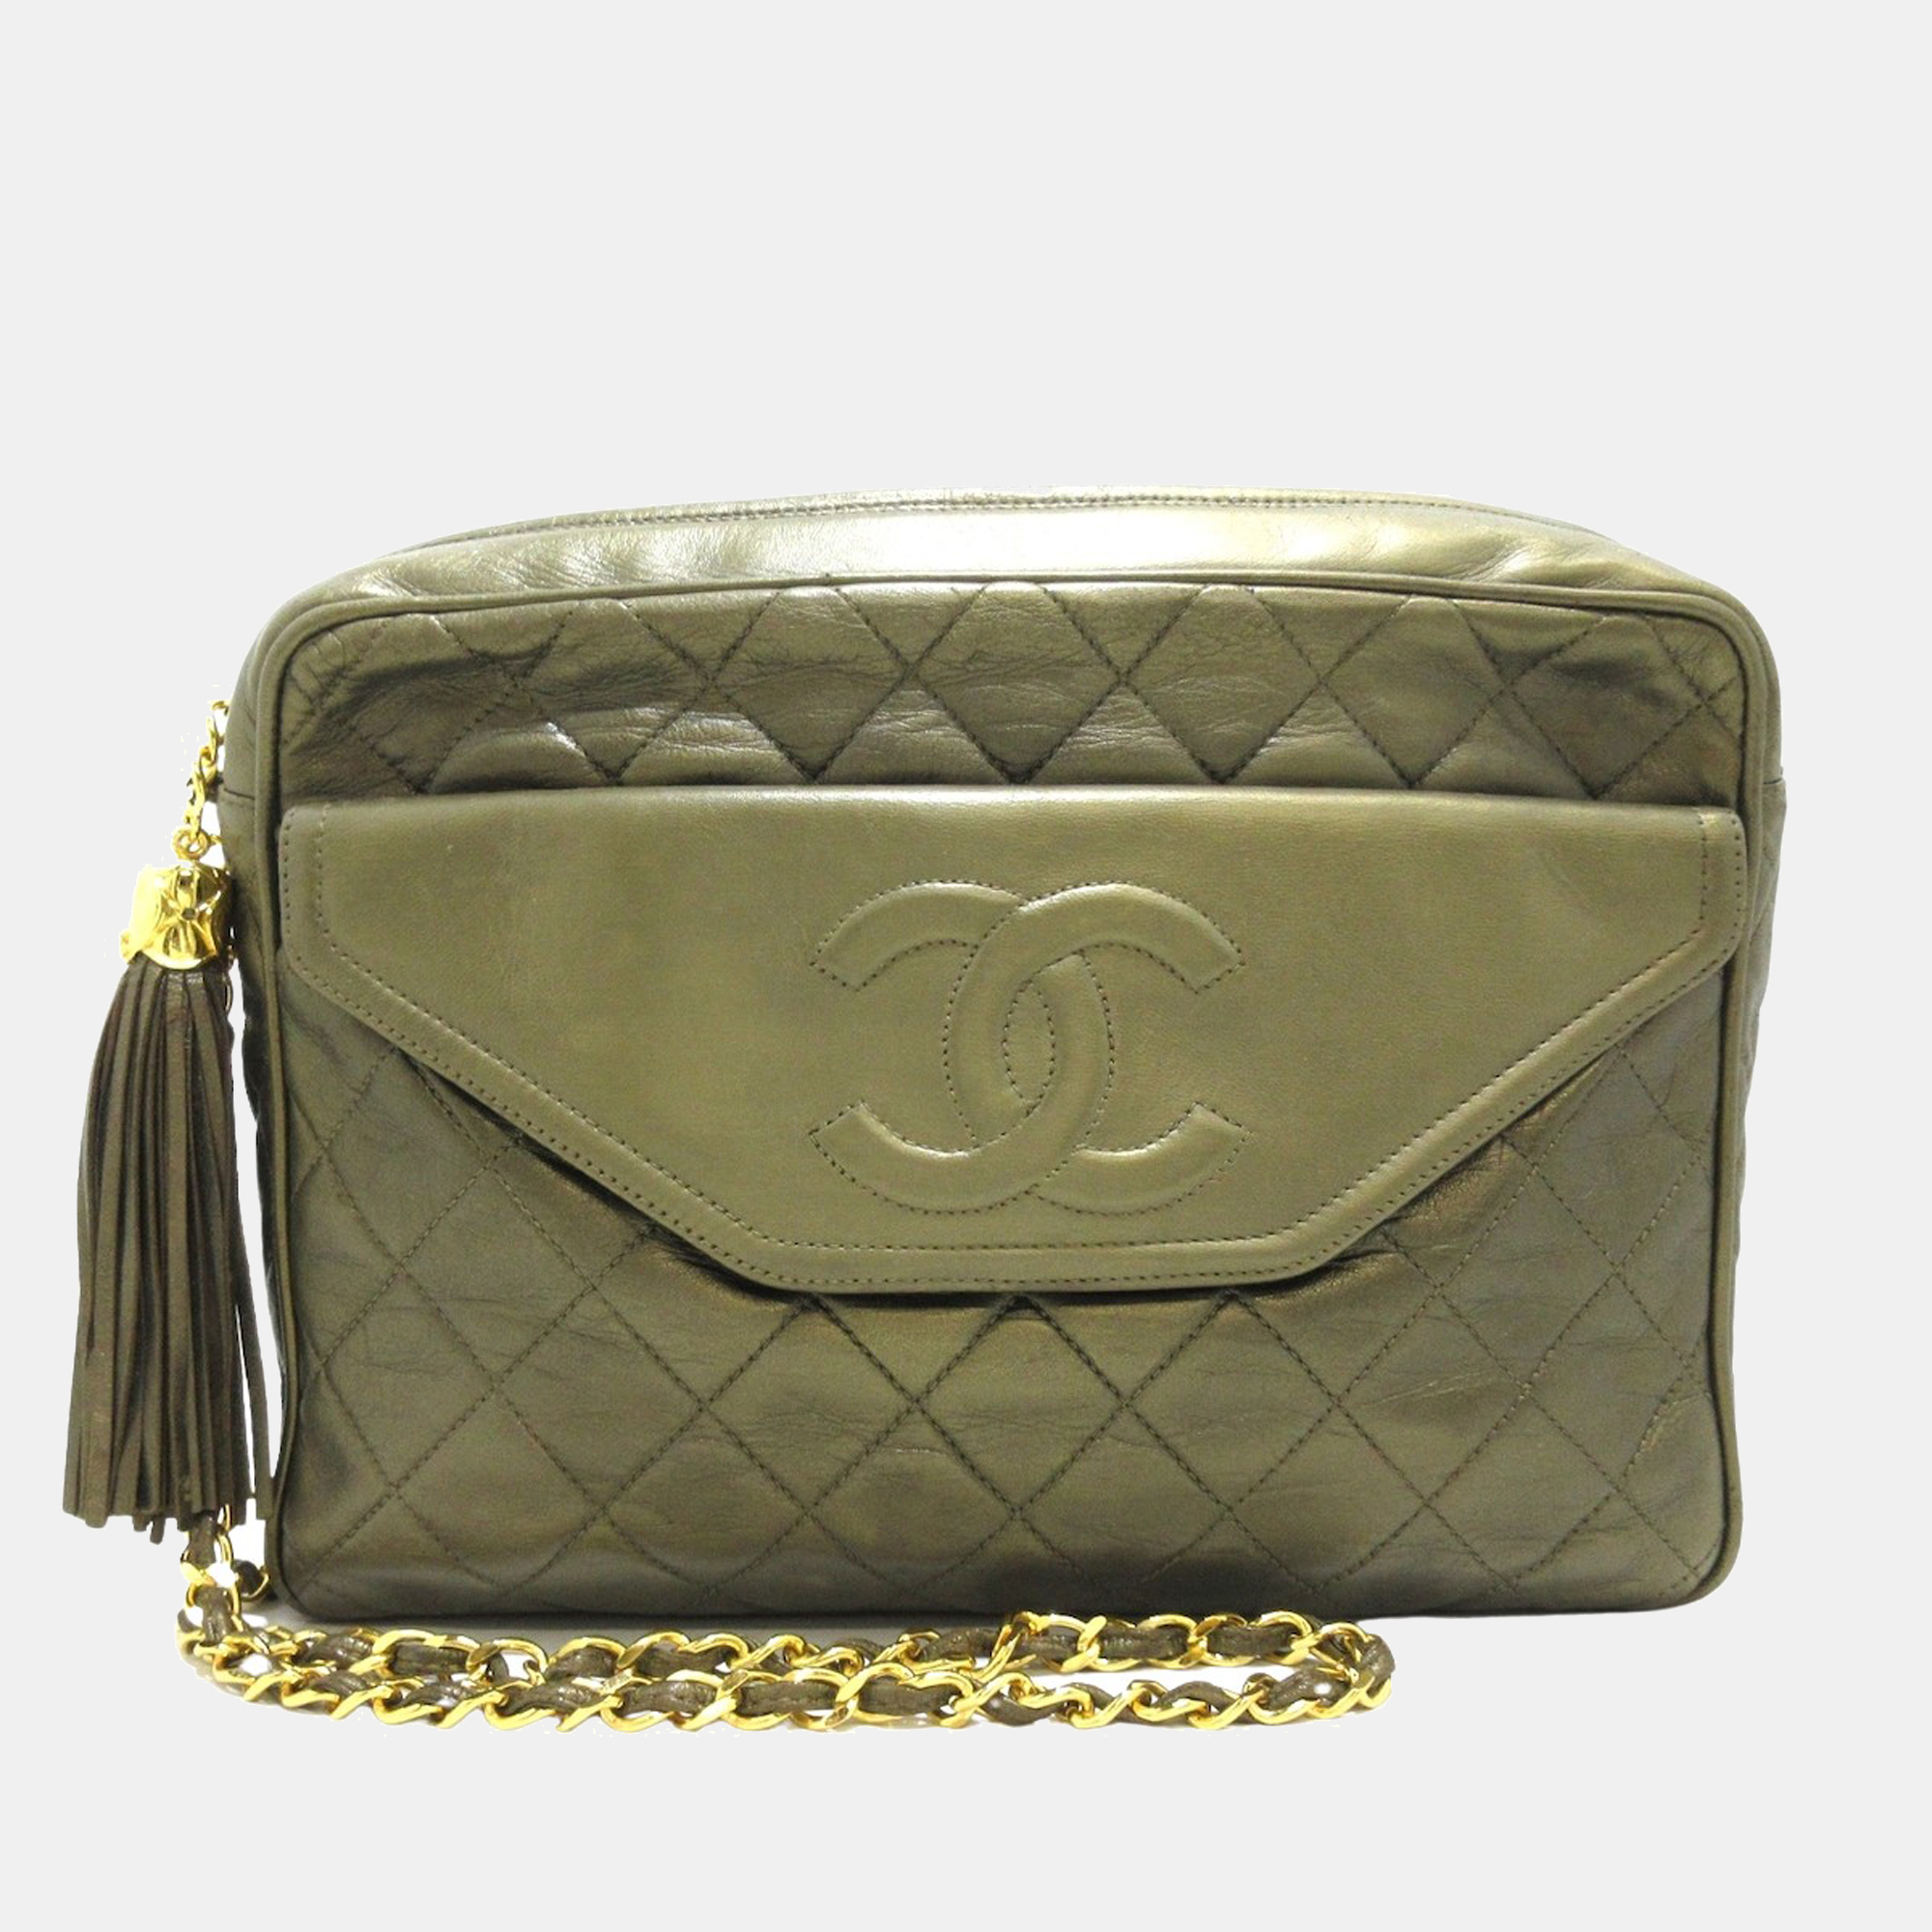 Chanel khaki leather cc tassle camera bag